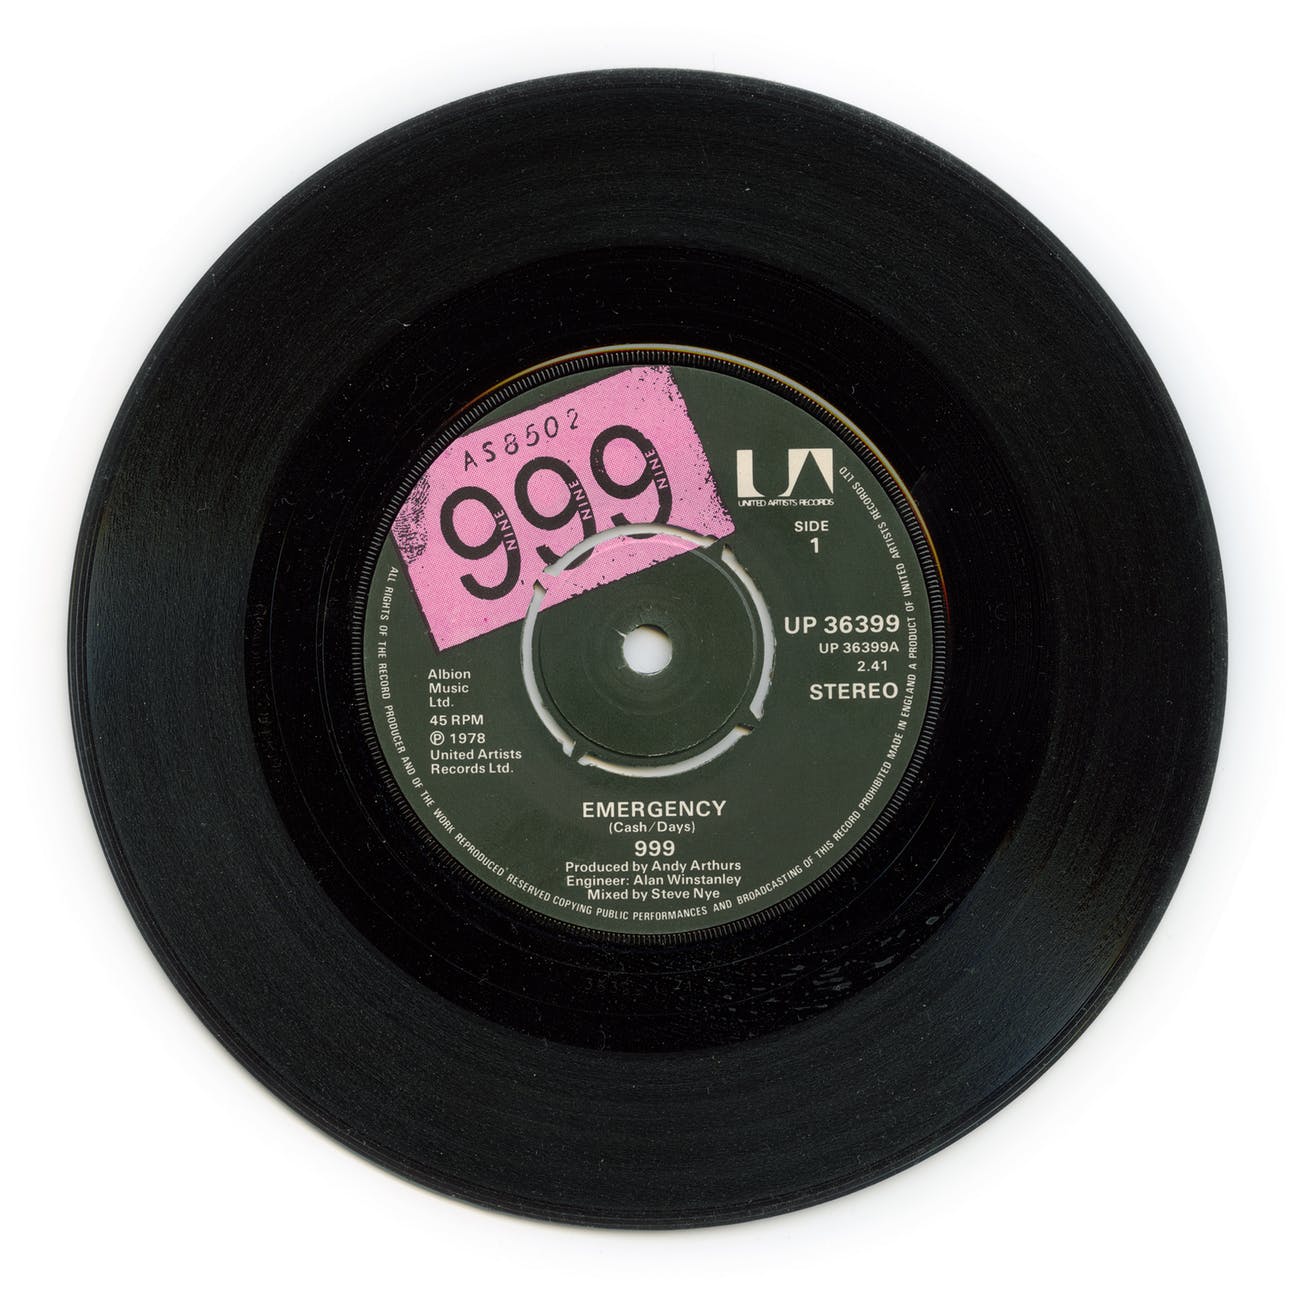 black and gray vinyl record